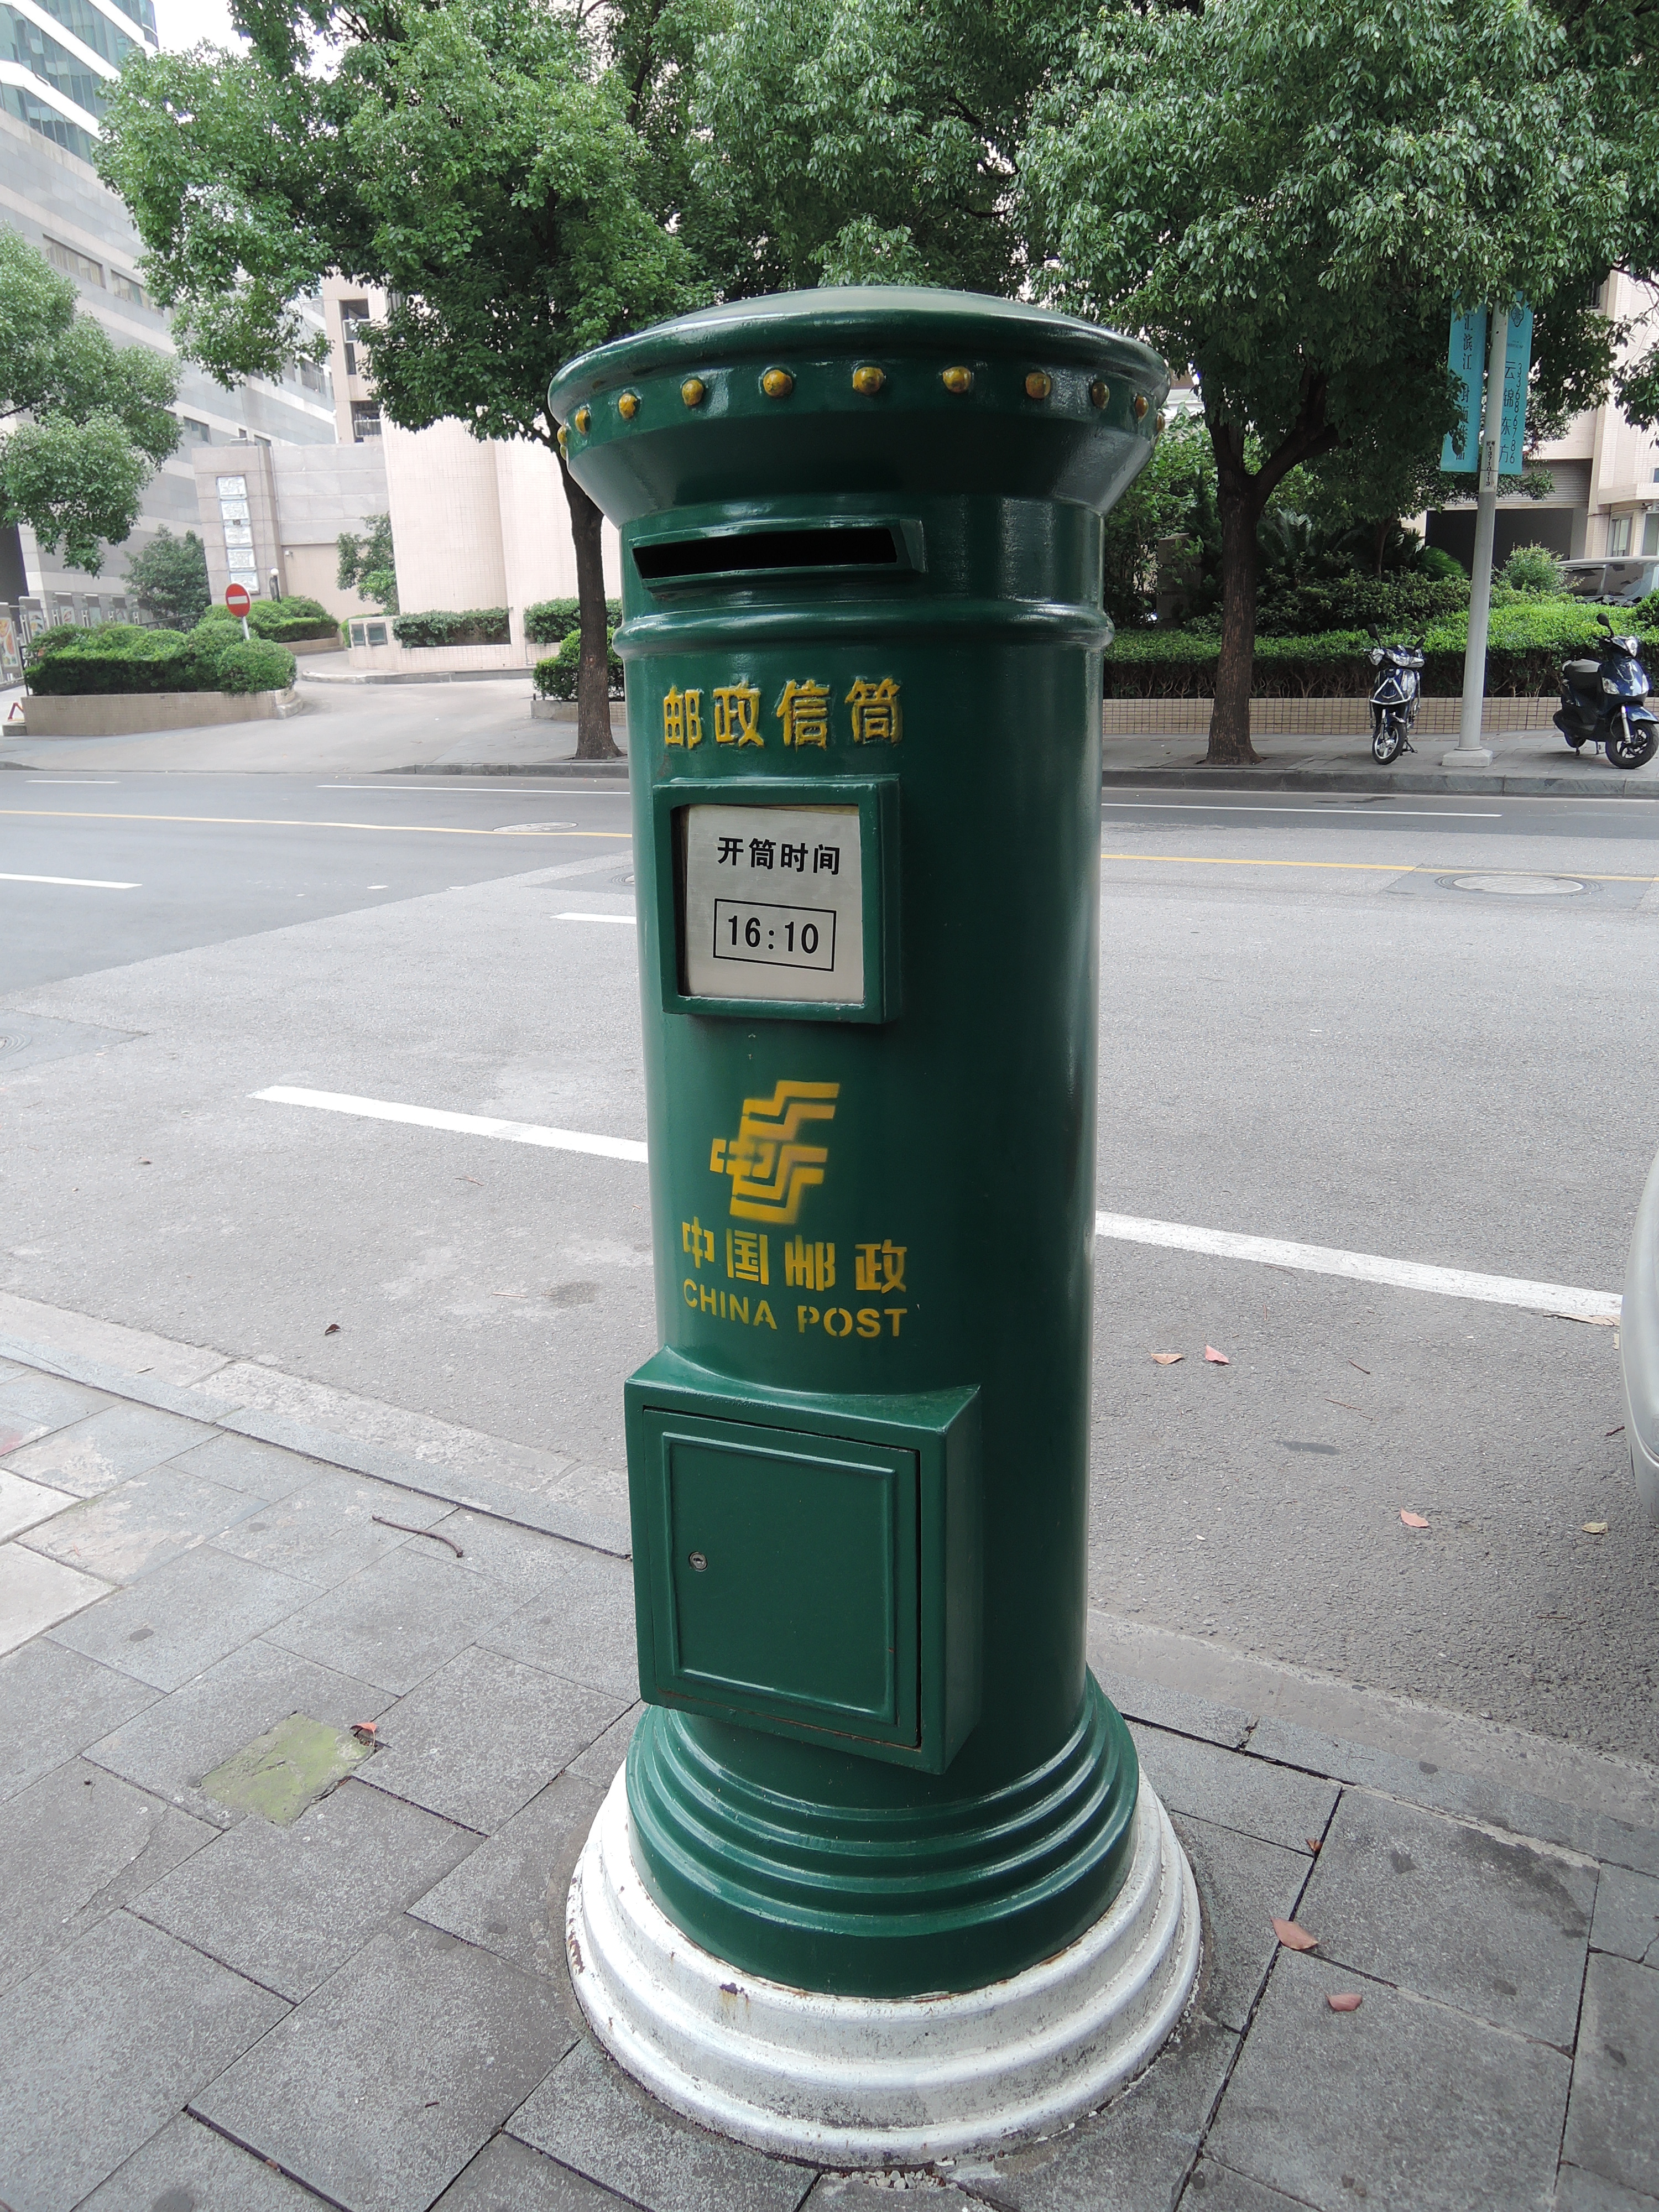 Chinese_post_box_in_Shanghai.JPG